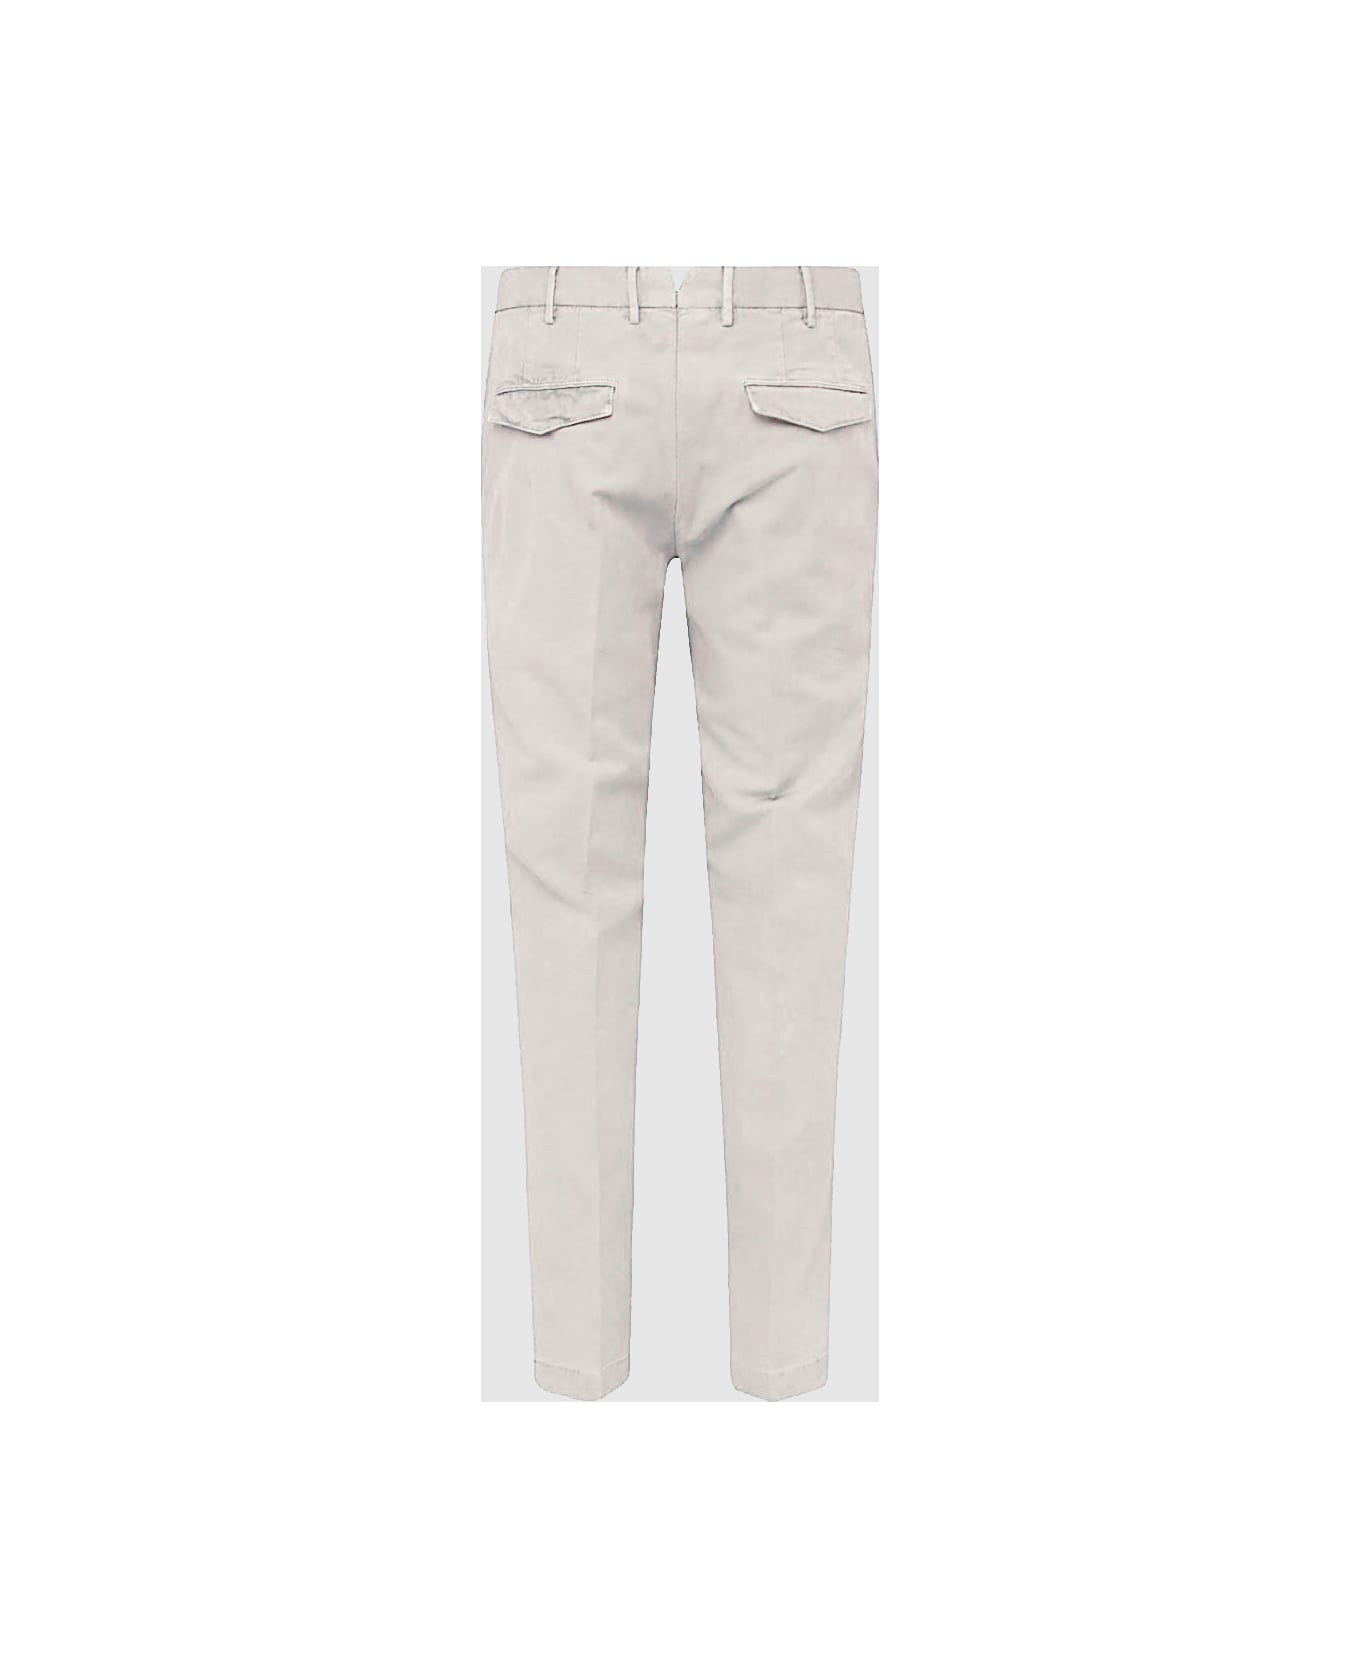 PT Torino Light Grey Cotton Pants - Light Grey